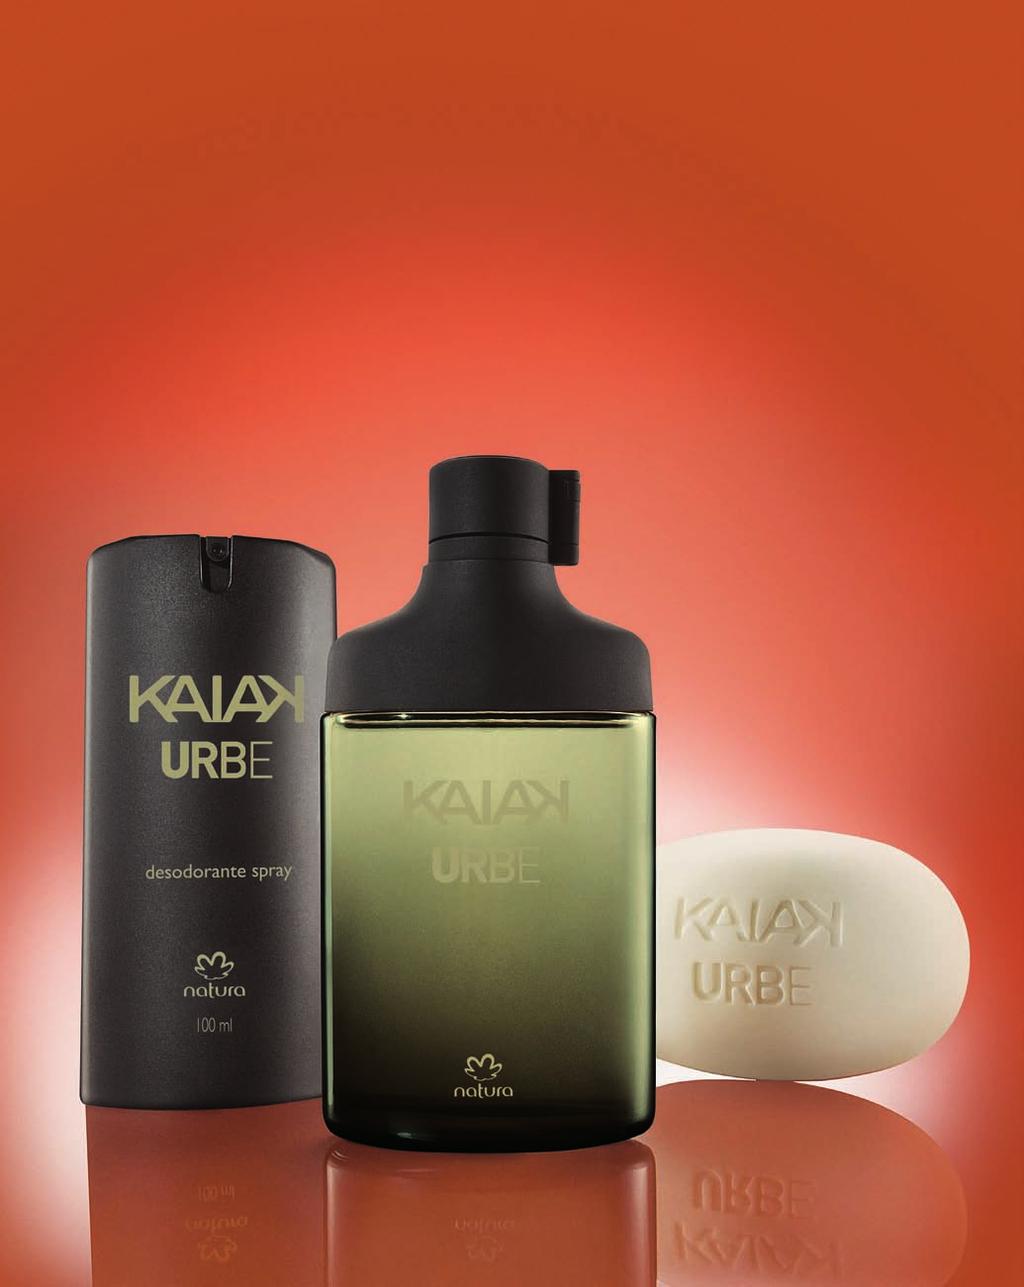 Presente KAIAK URbE 1 Desodorante spray masculino 100 ml EXCLUSIVO 1 Desodorante